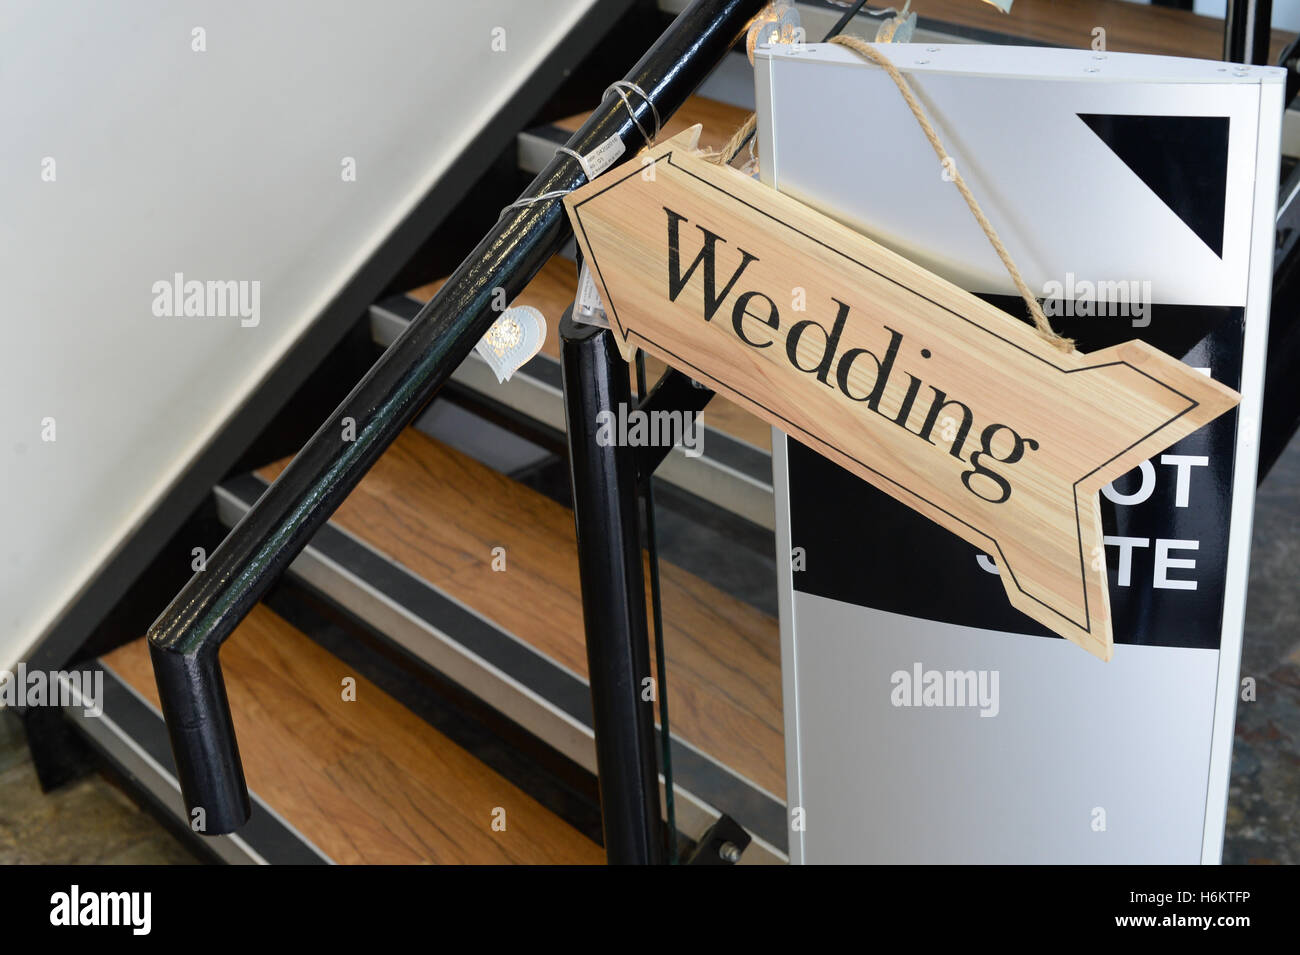 Wedding arrow sign pointing upstairs, wedding venue decor. Stock Photo